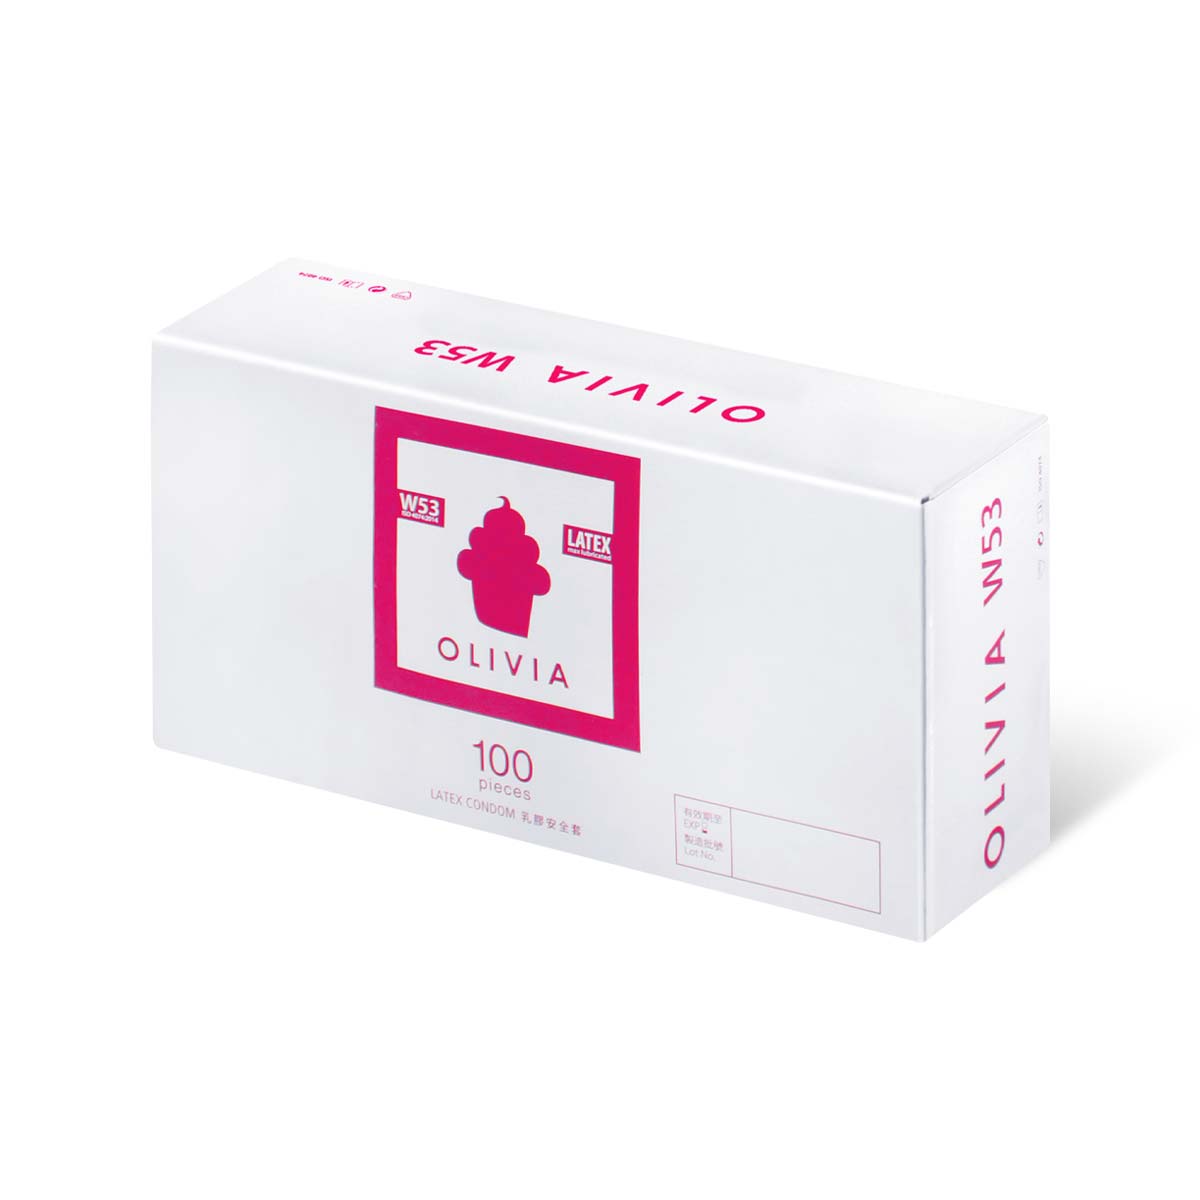 Olivia W53 max-lubricated 100 pieces bulk pack Latex Condom-p_1